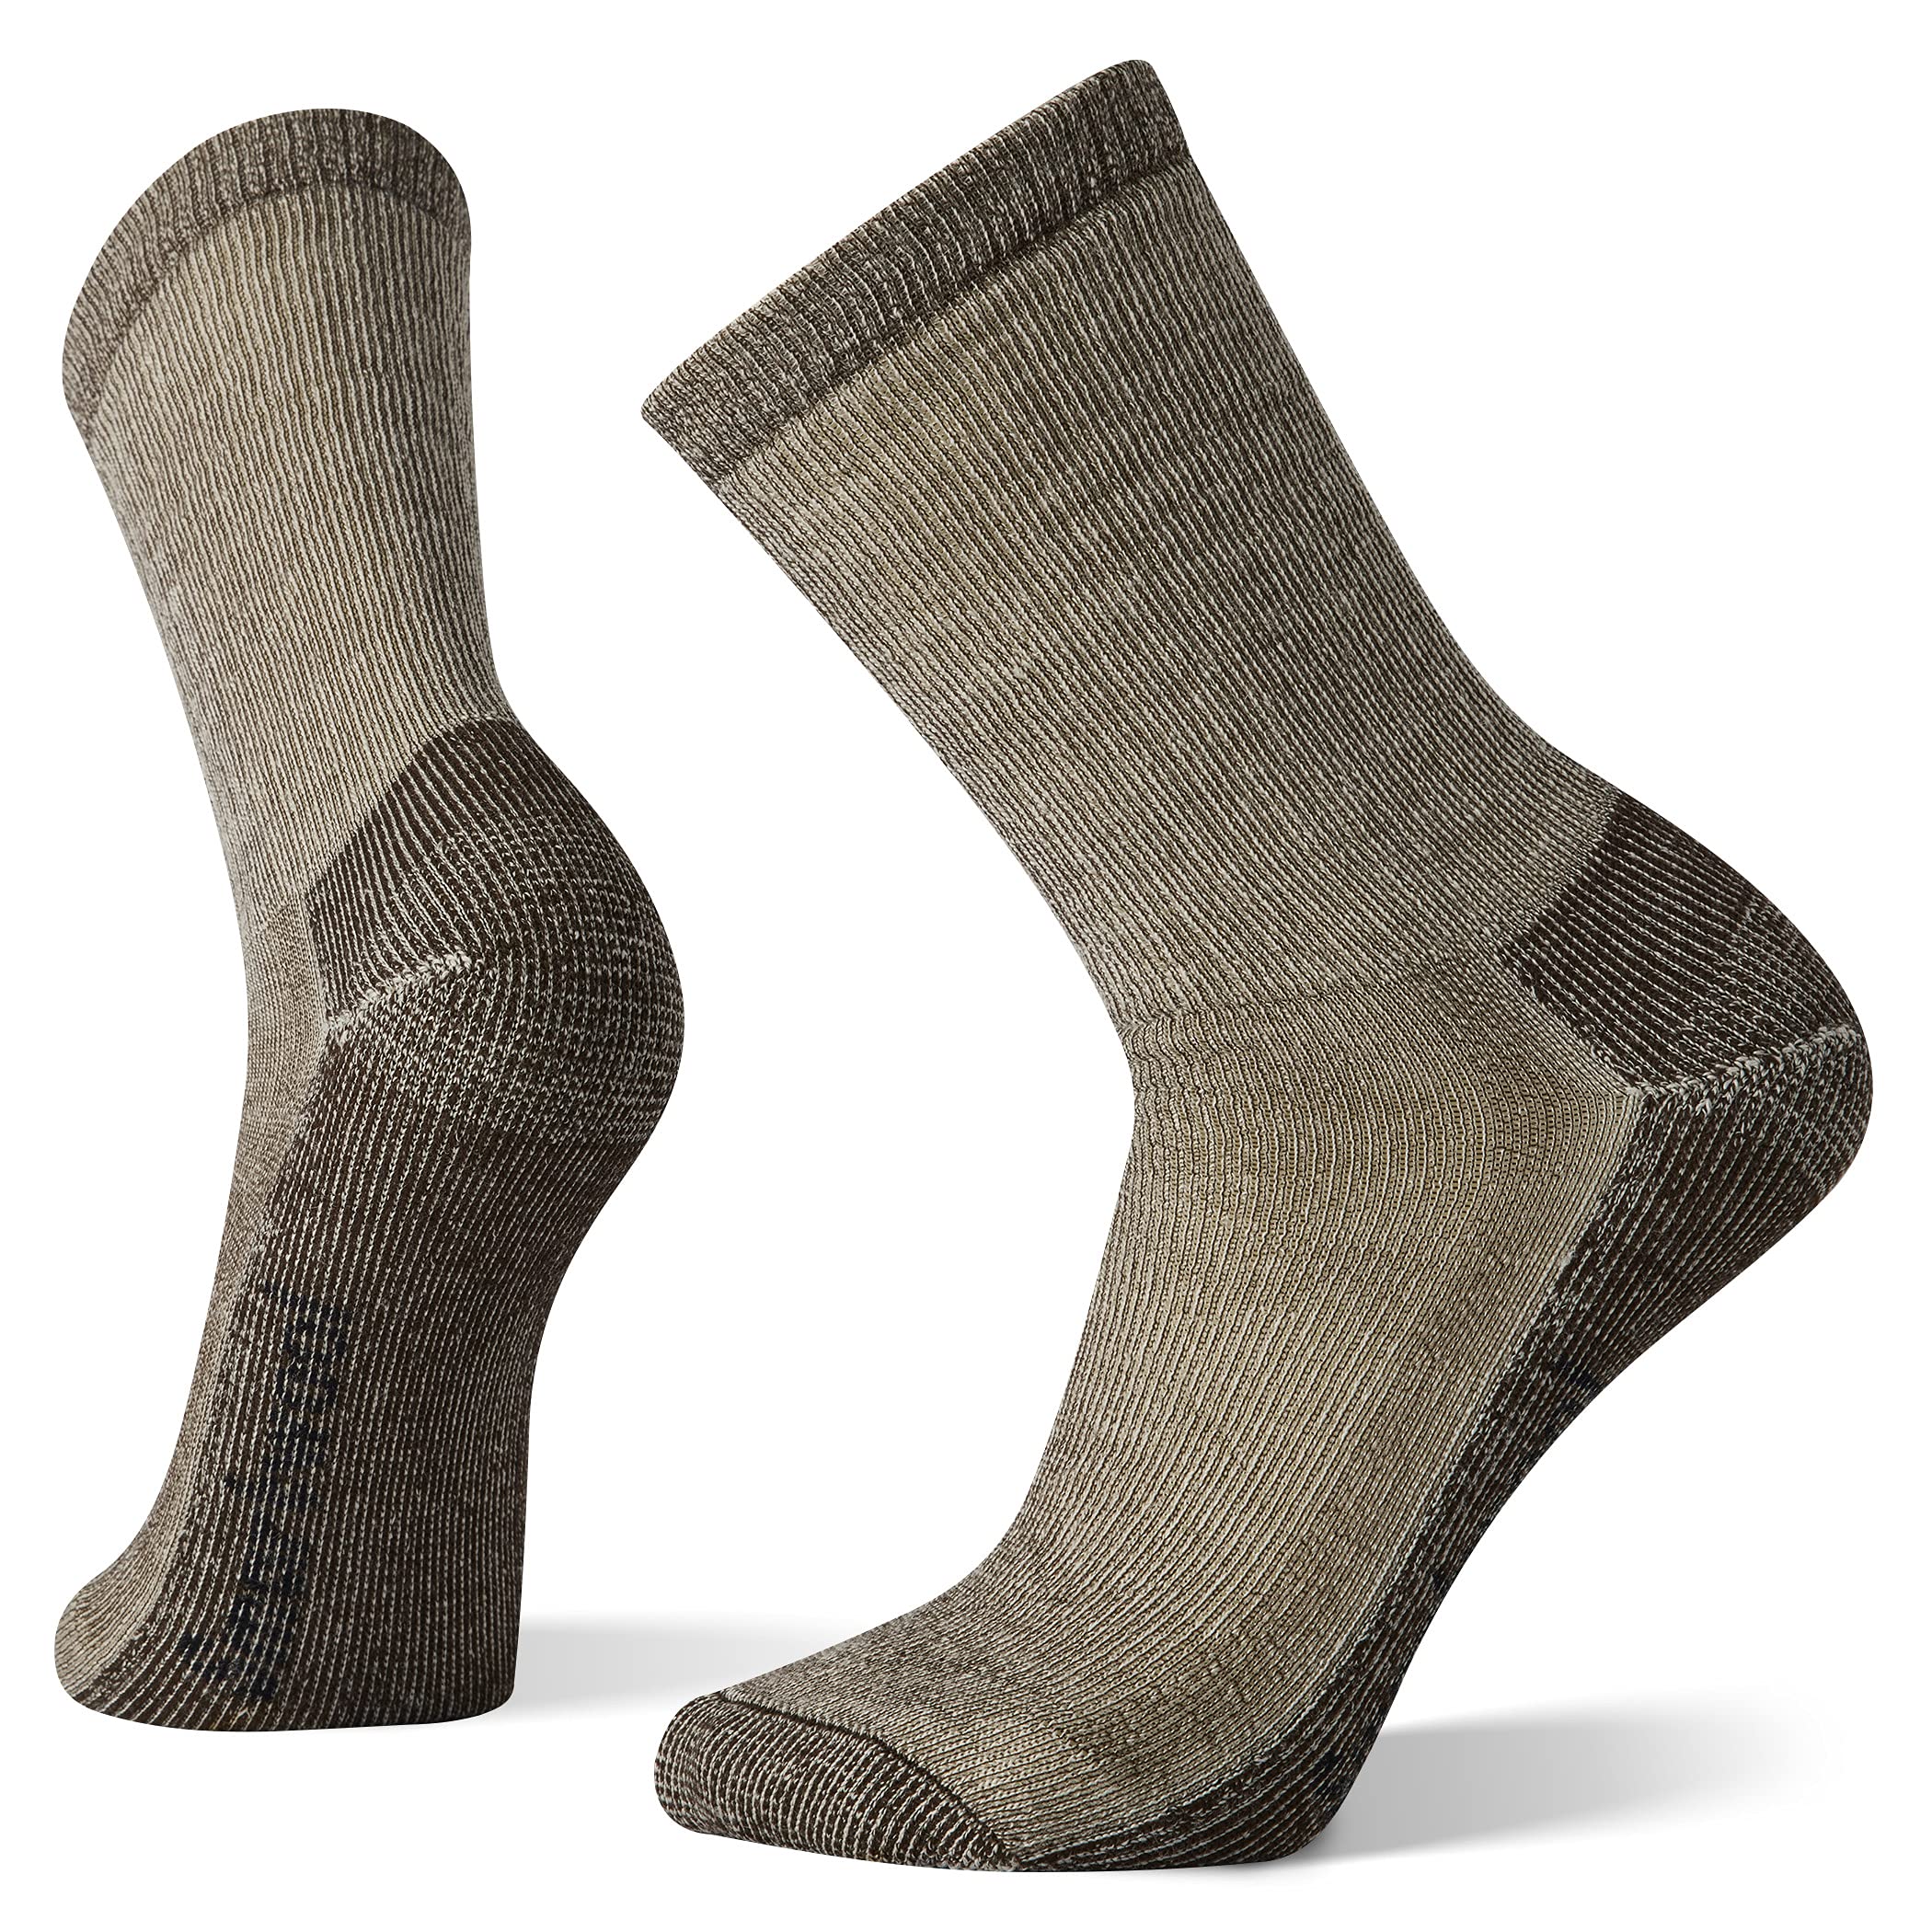 Smartwool Men’s Hike Classic Edition Full Cushion Crew Socks – Merino Wool Socks for Hiking, Camping, Walking & Hunting – Made in USA - Chestnut, L